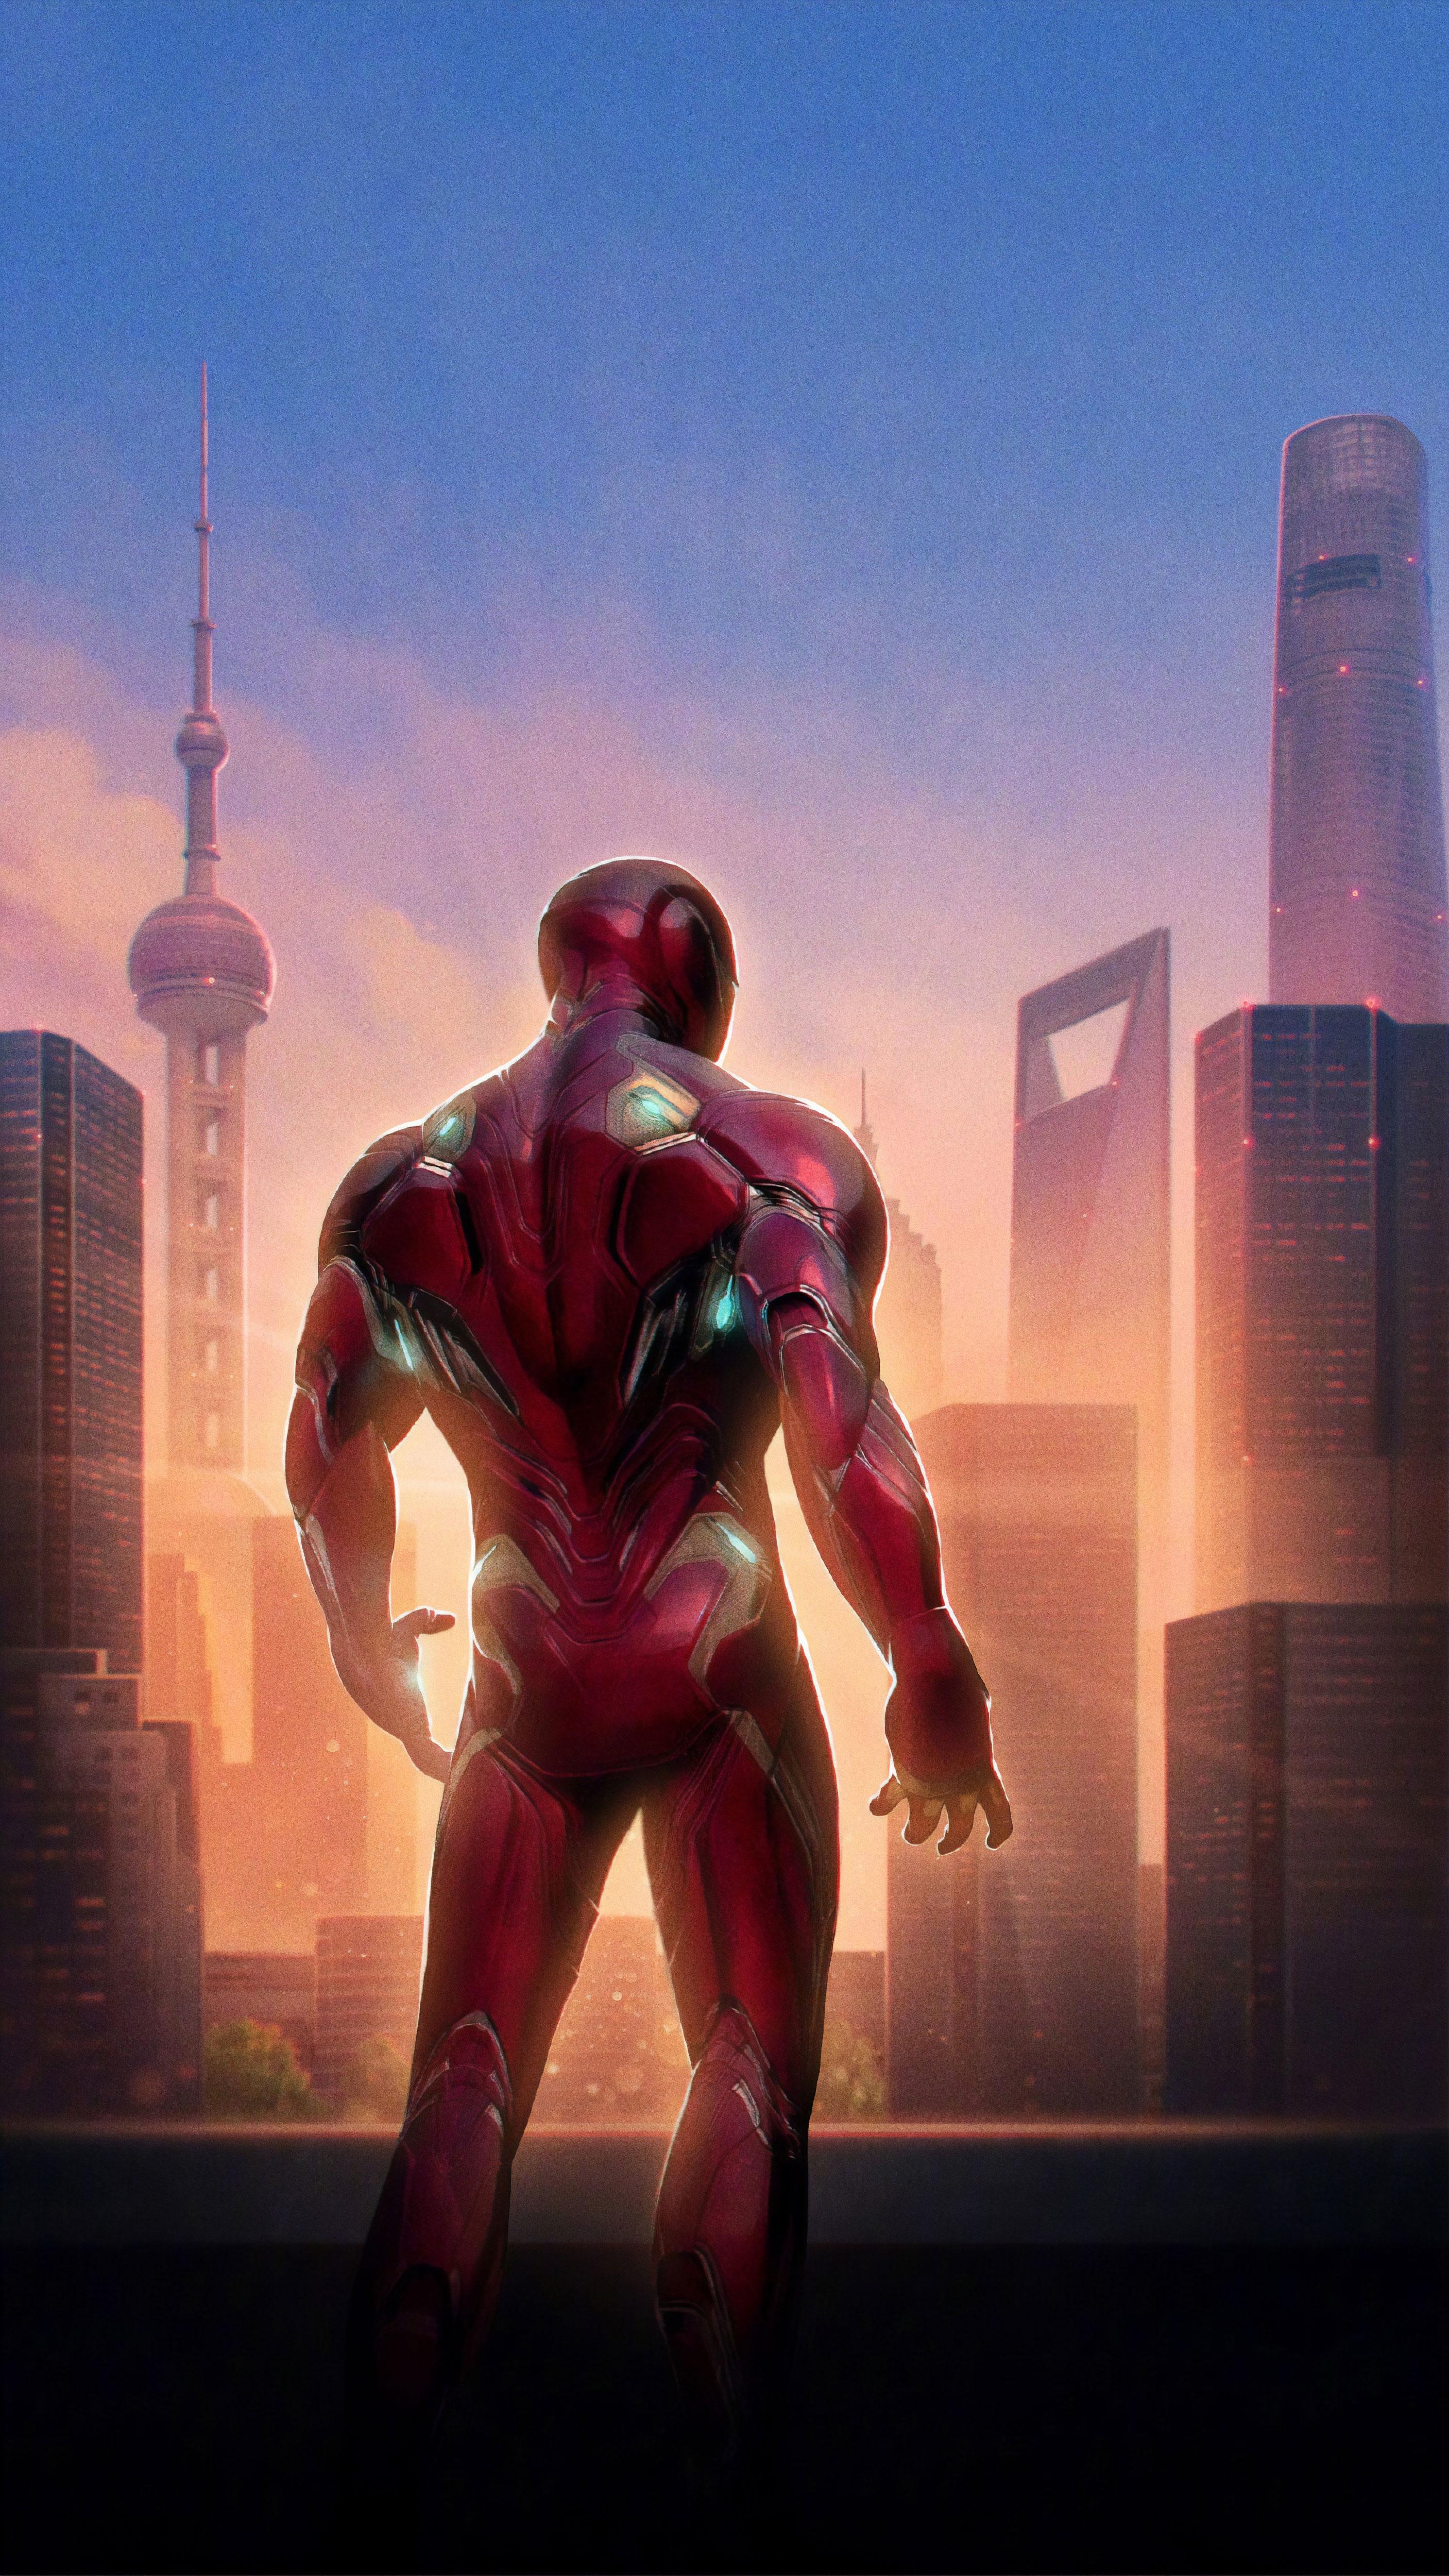 Iron Man Avengers Endgame Wallpaper, HD Movies 4K Wallpaper